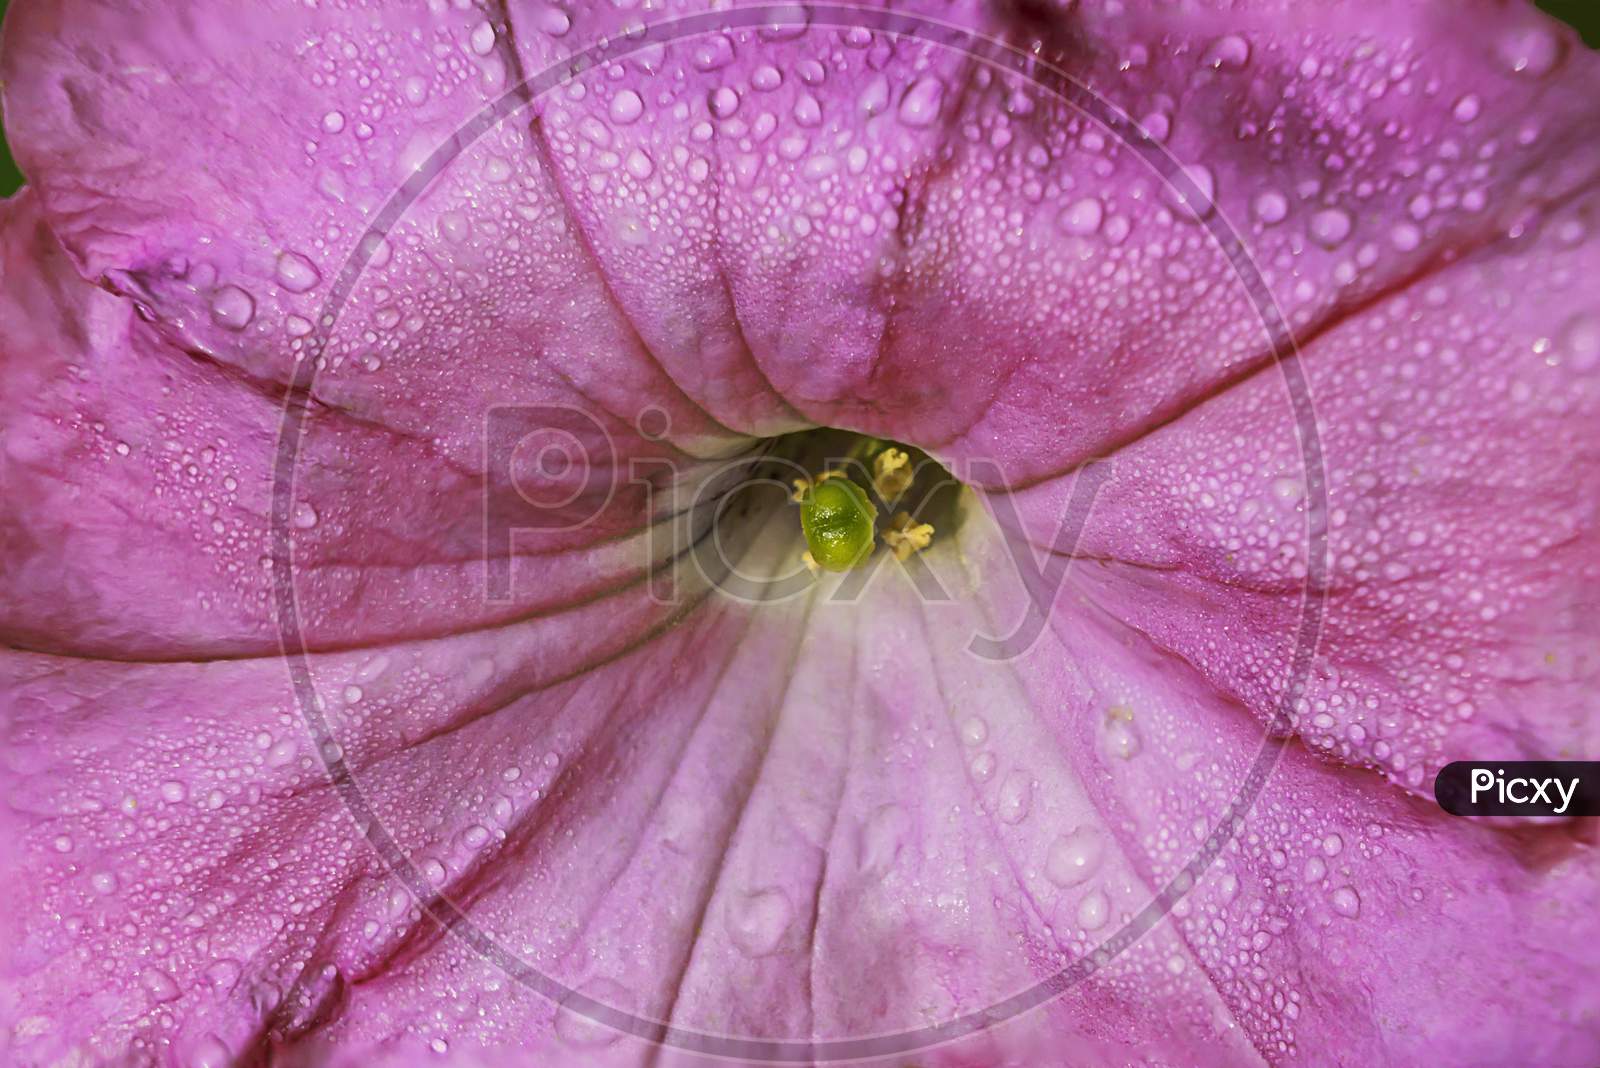 Petunia Flower In A Close Up Look